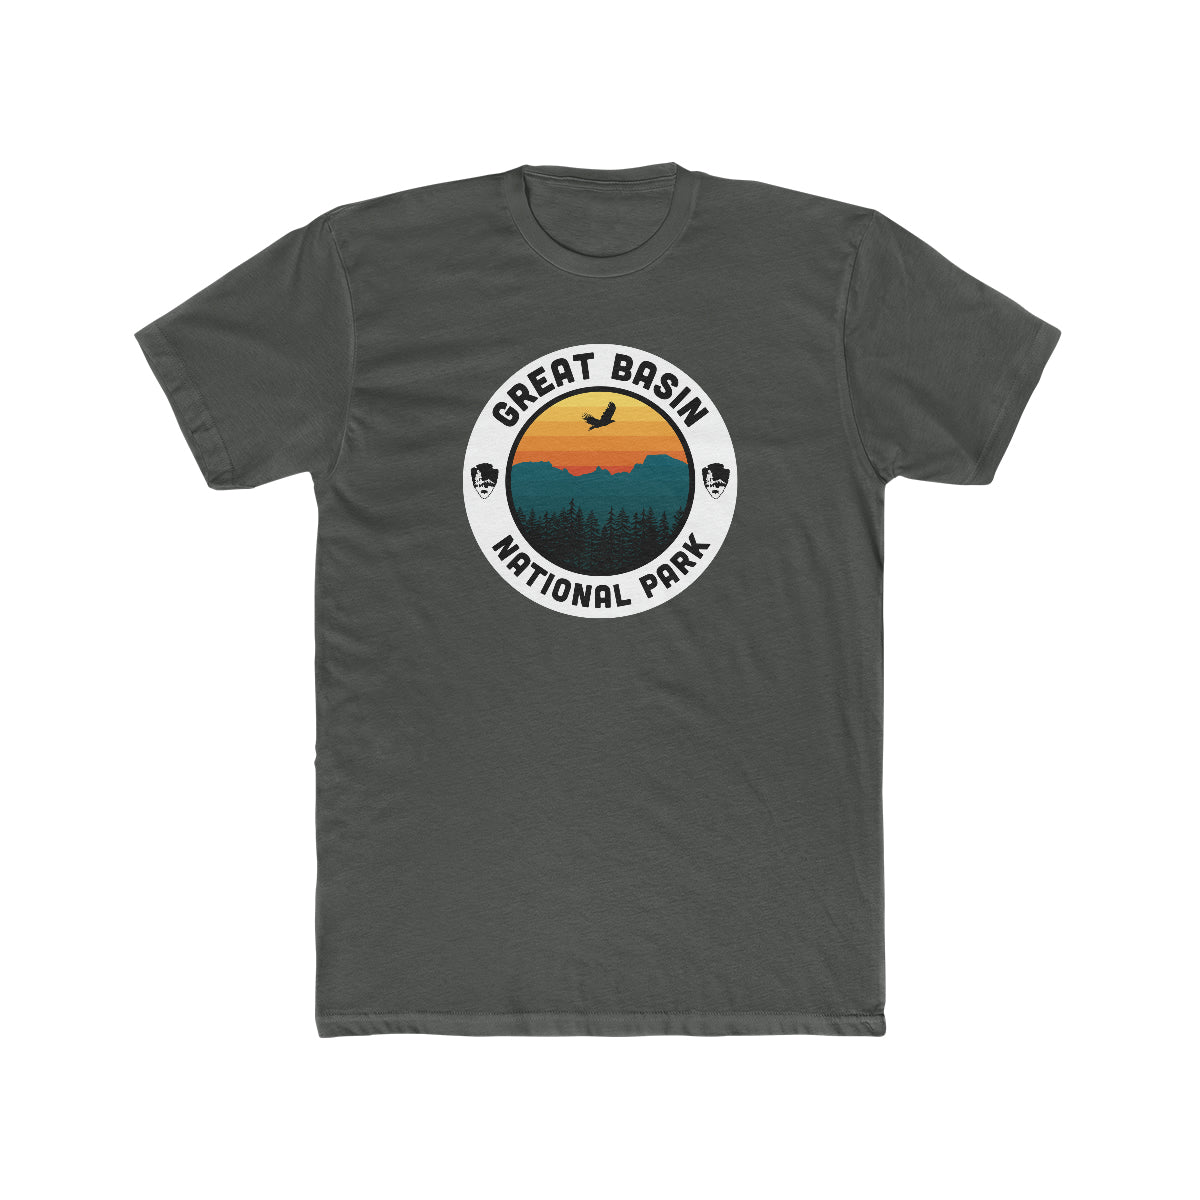 Great Basin National Park T-Shirt - Round Badge Design